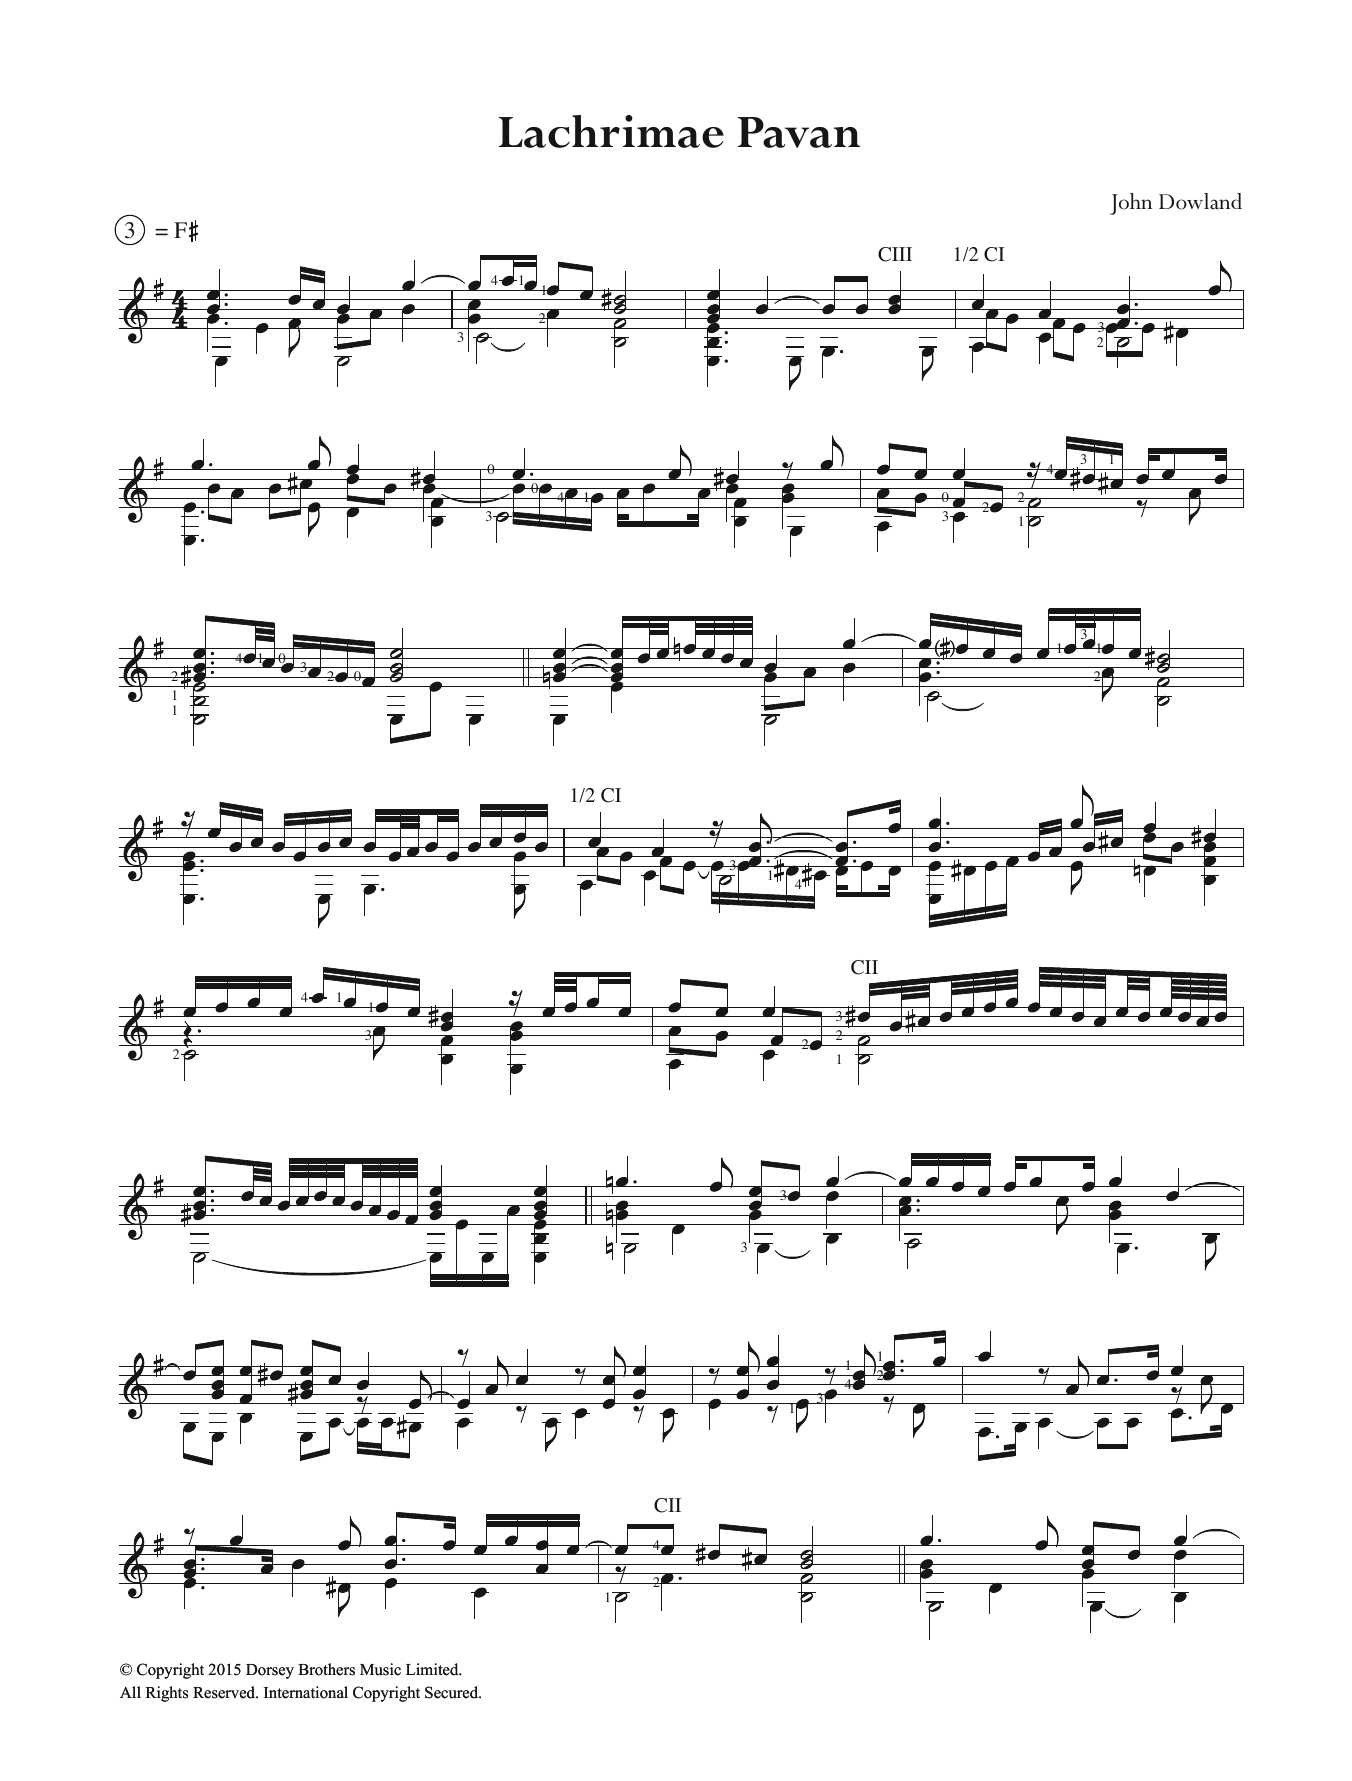 John Dowland Lachrimae Pavan Sheet Music Notes & Chords for Guitar - Download or Print PDF